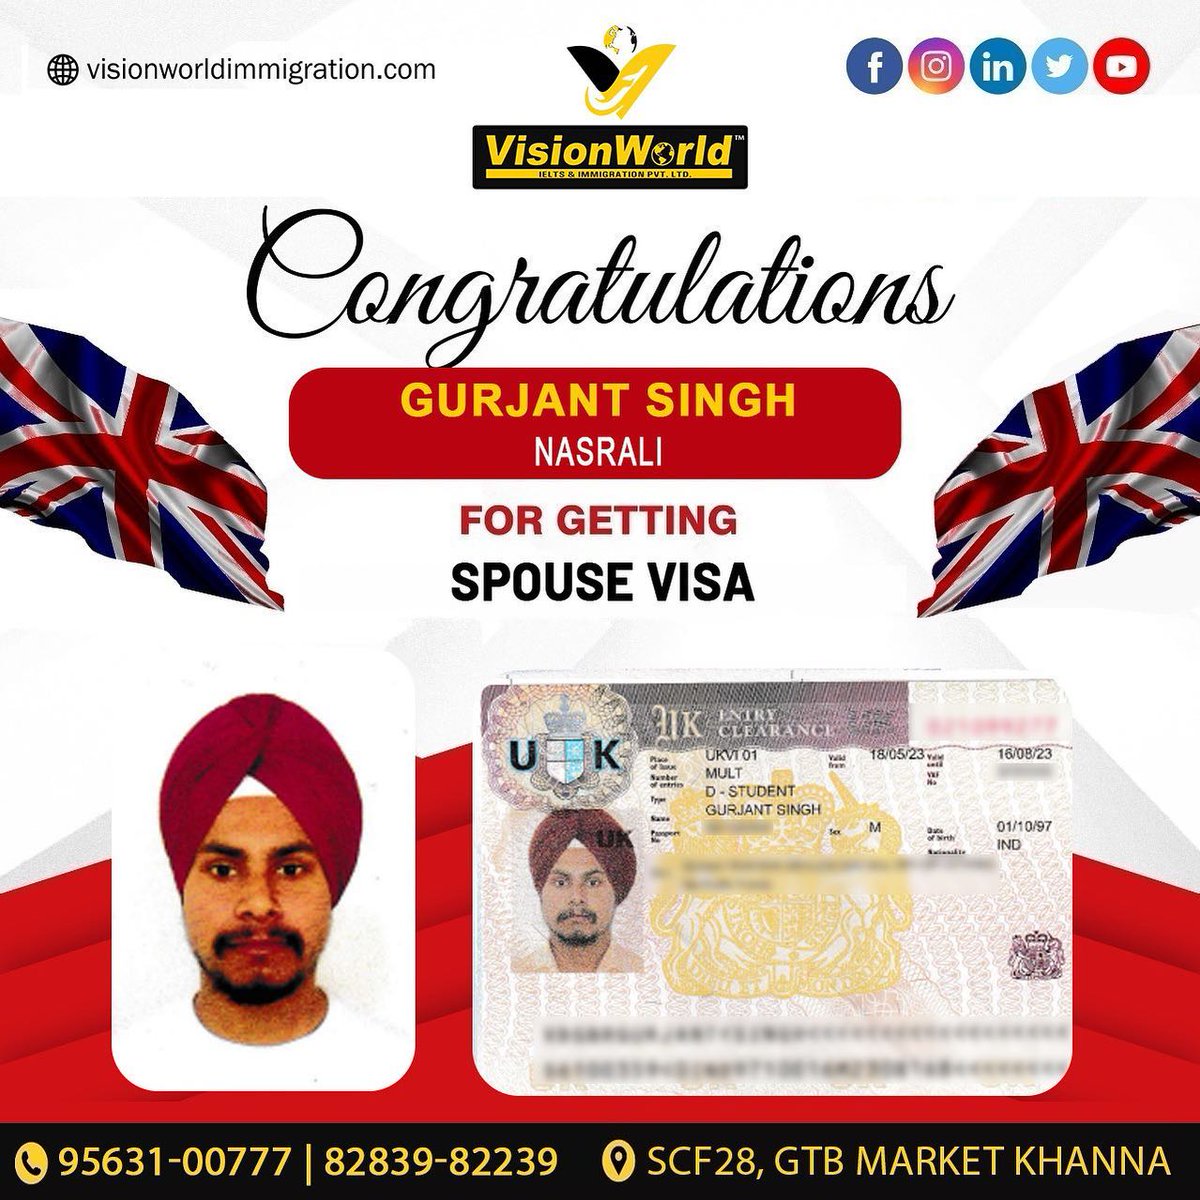 Congratulations Gurjant📷📷📷📷📷
For enquiries@ +91- 95631-00777, 82839-82239
#visionworldimmigration #immigration #spousevisa #ukspousevisa #ukvisa #successstory #visaconsultants #visa #khanna #ludhiana #punjab